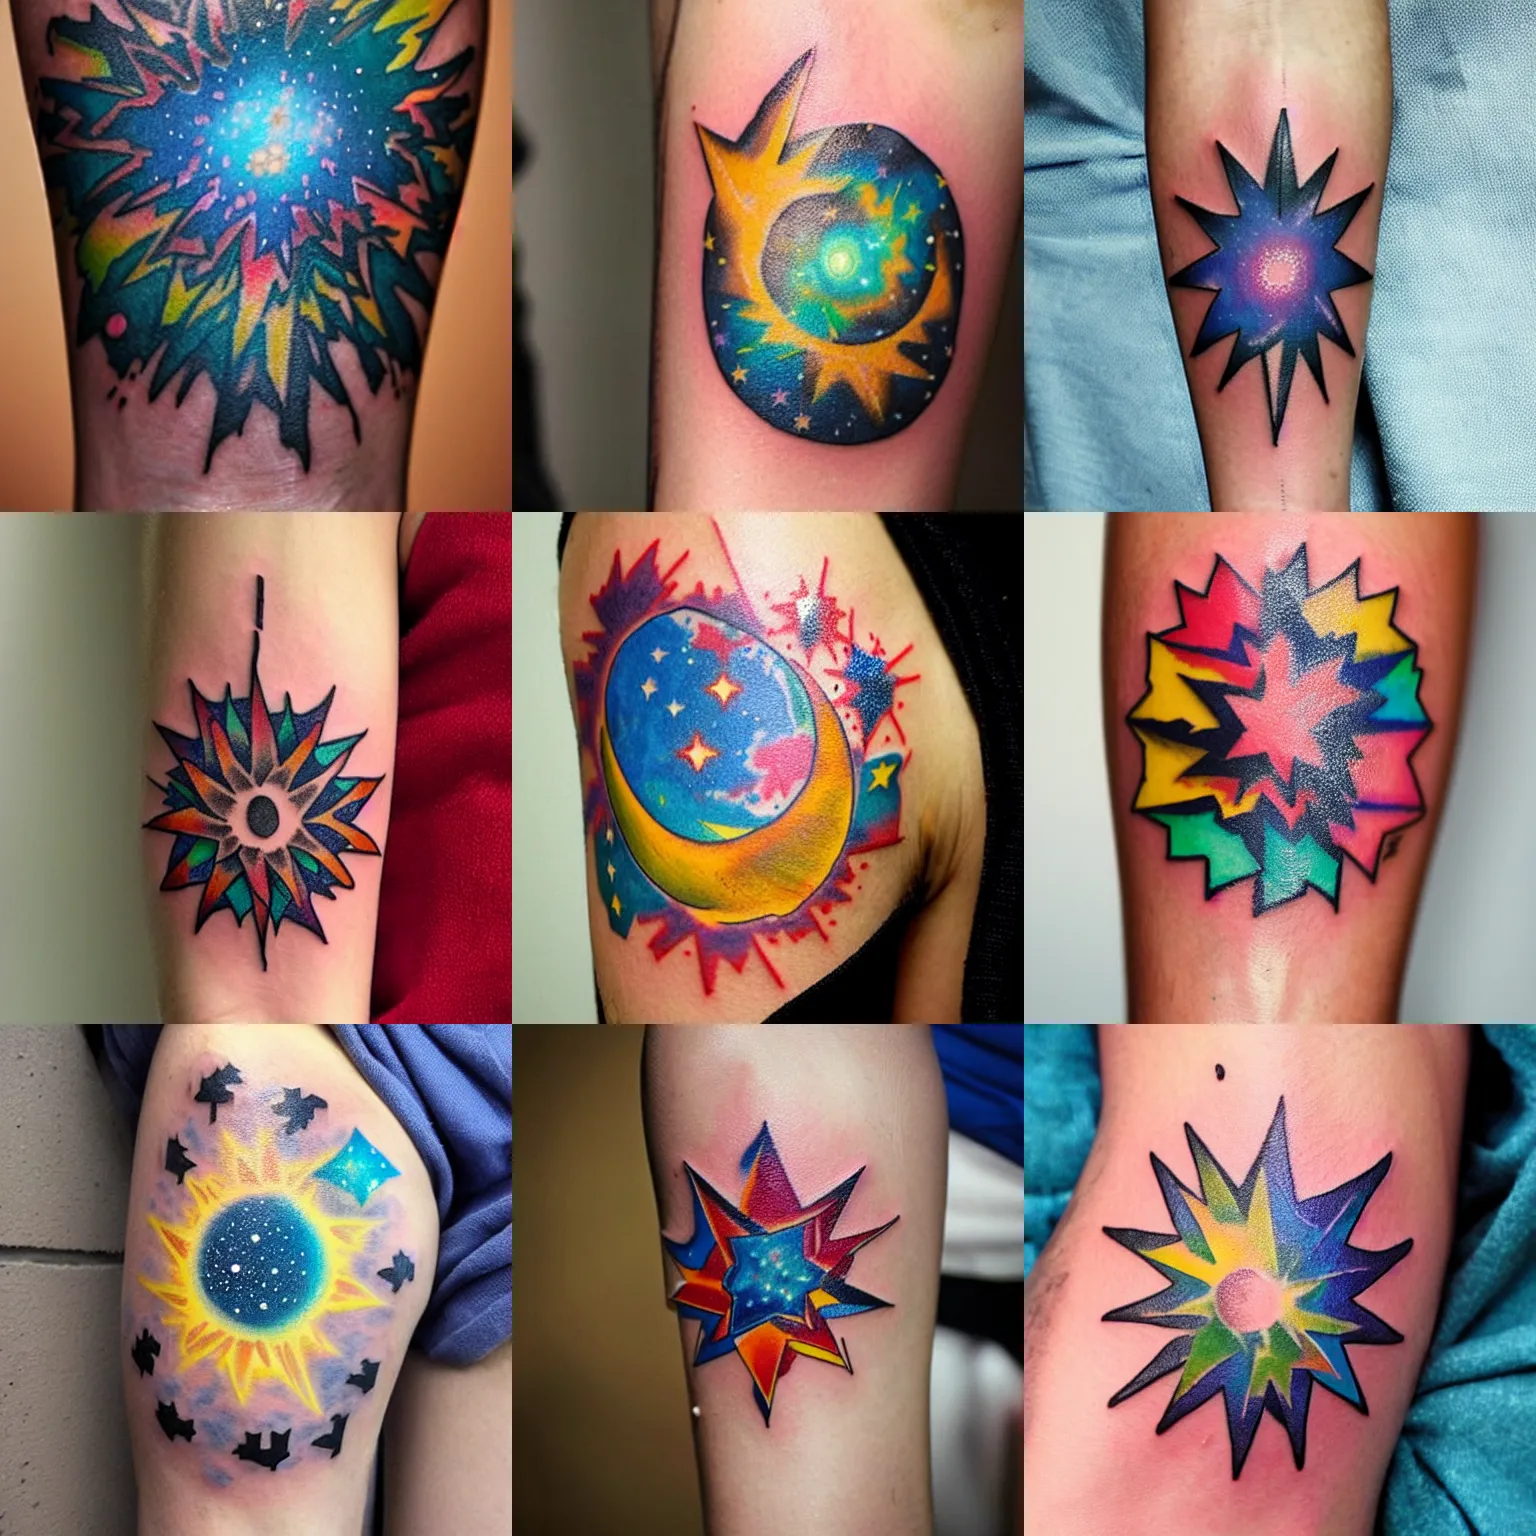 Prompt: an amazing stick and poke tattoo of a super nova, colorful